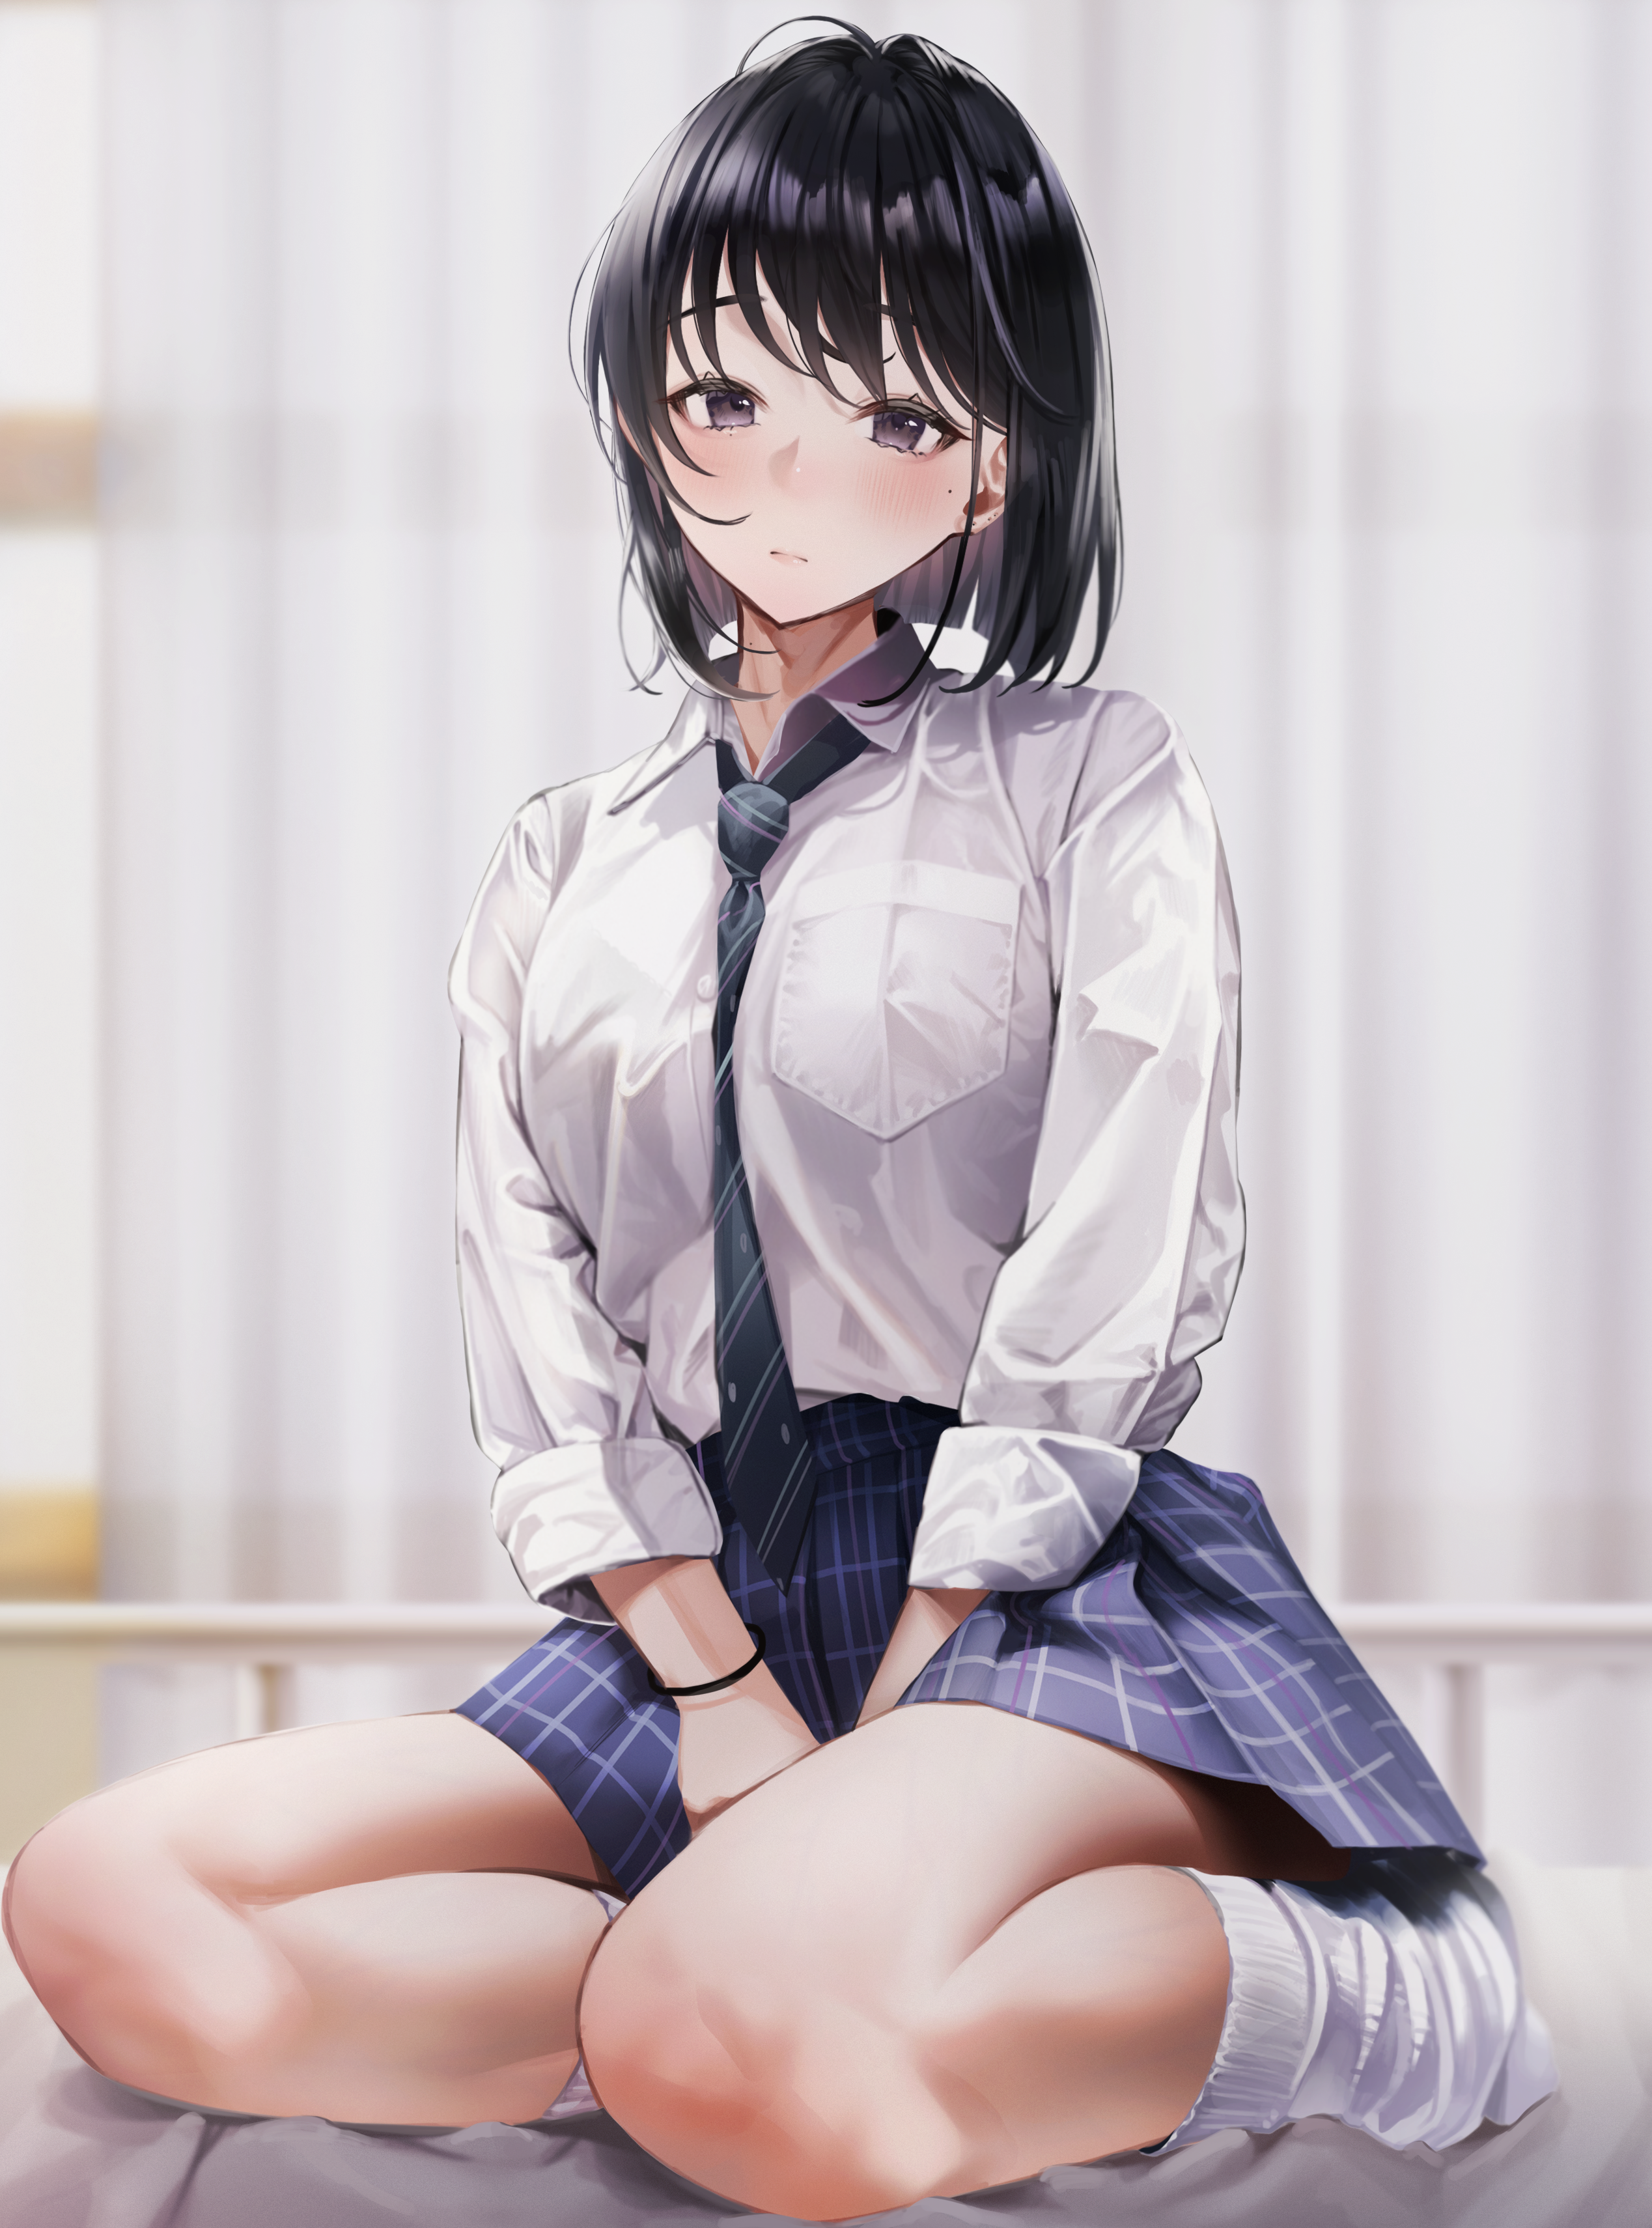 Anime Anime Girls School Uniform Schoolgirl Tie Black Hair Blouse Skirt Plaid Skirt Knees Sad Lookin 2537x3421